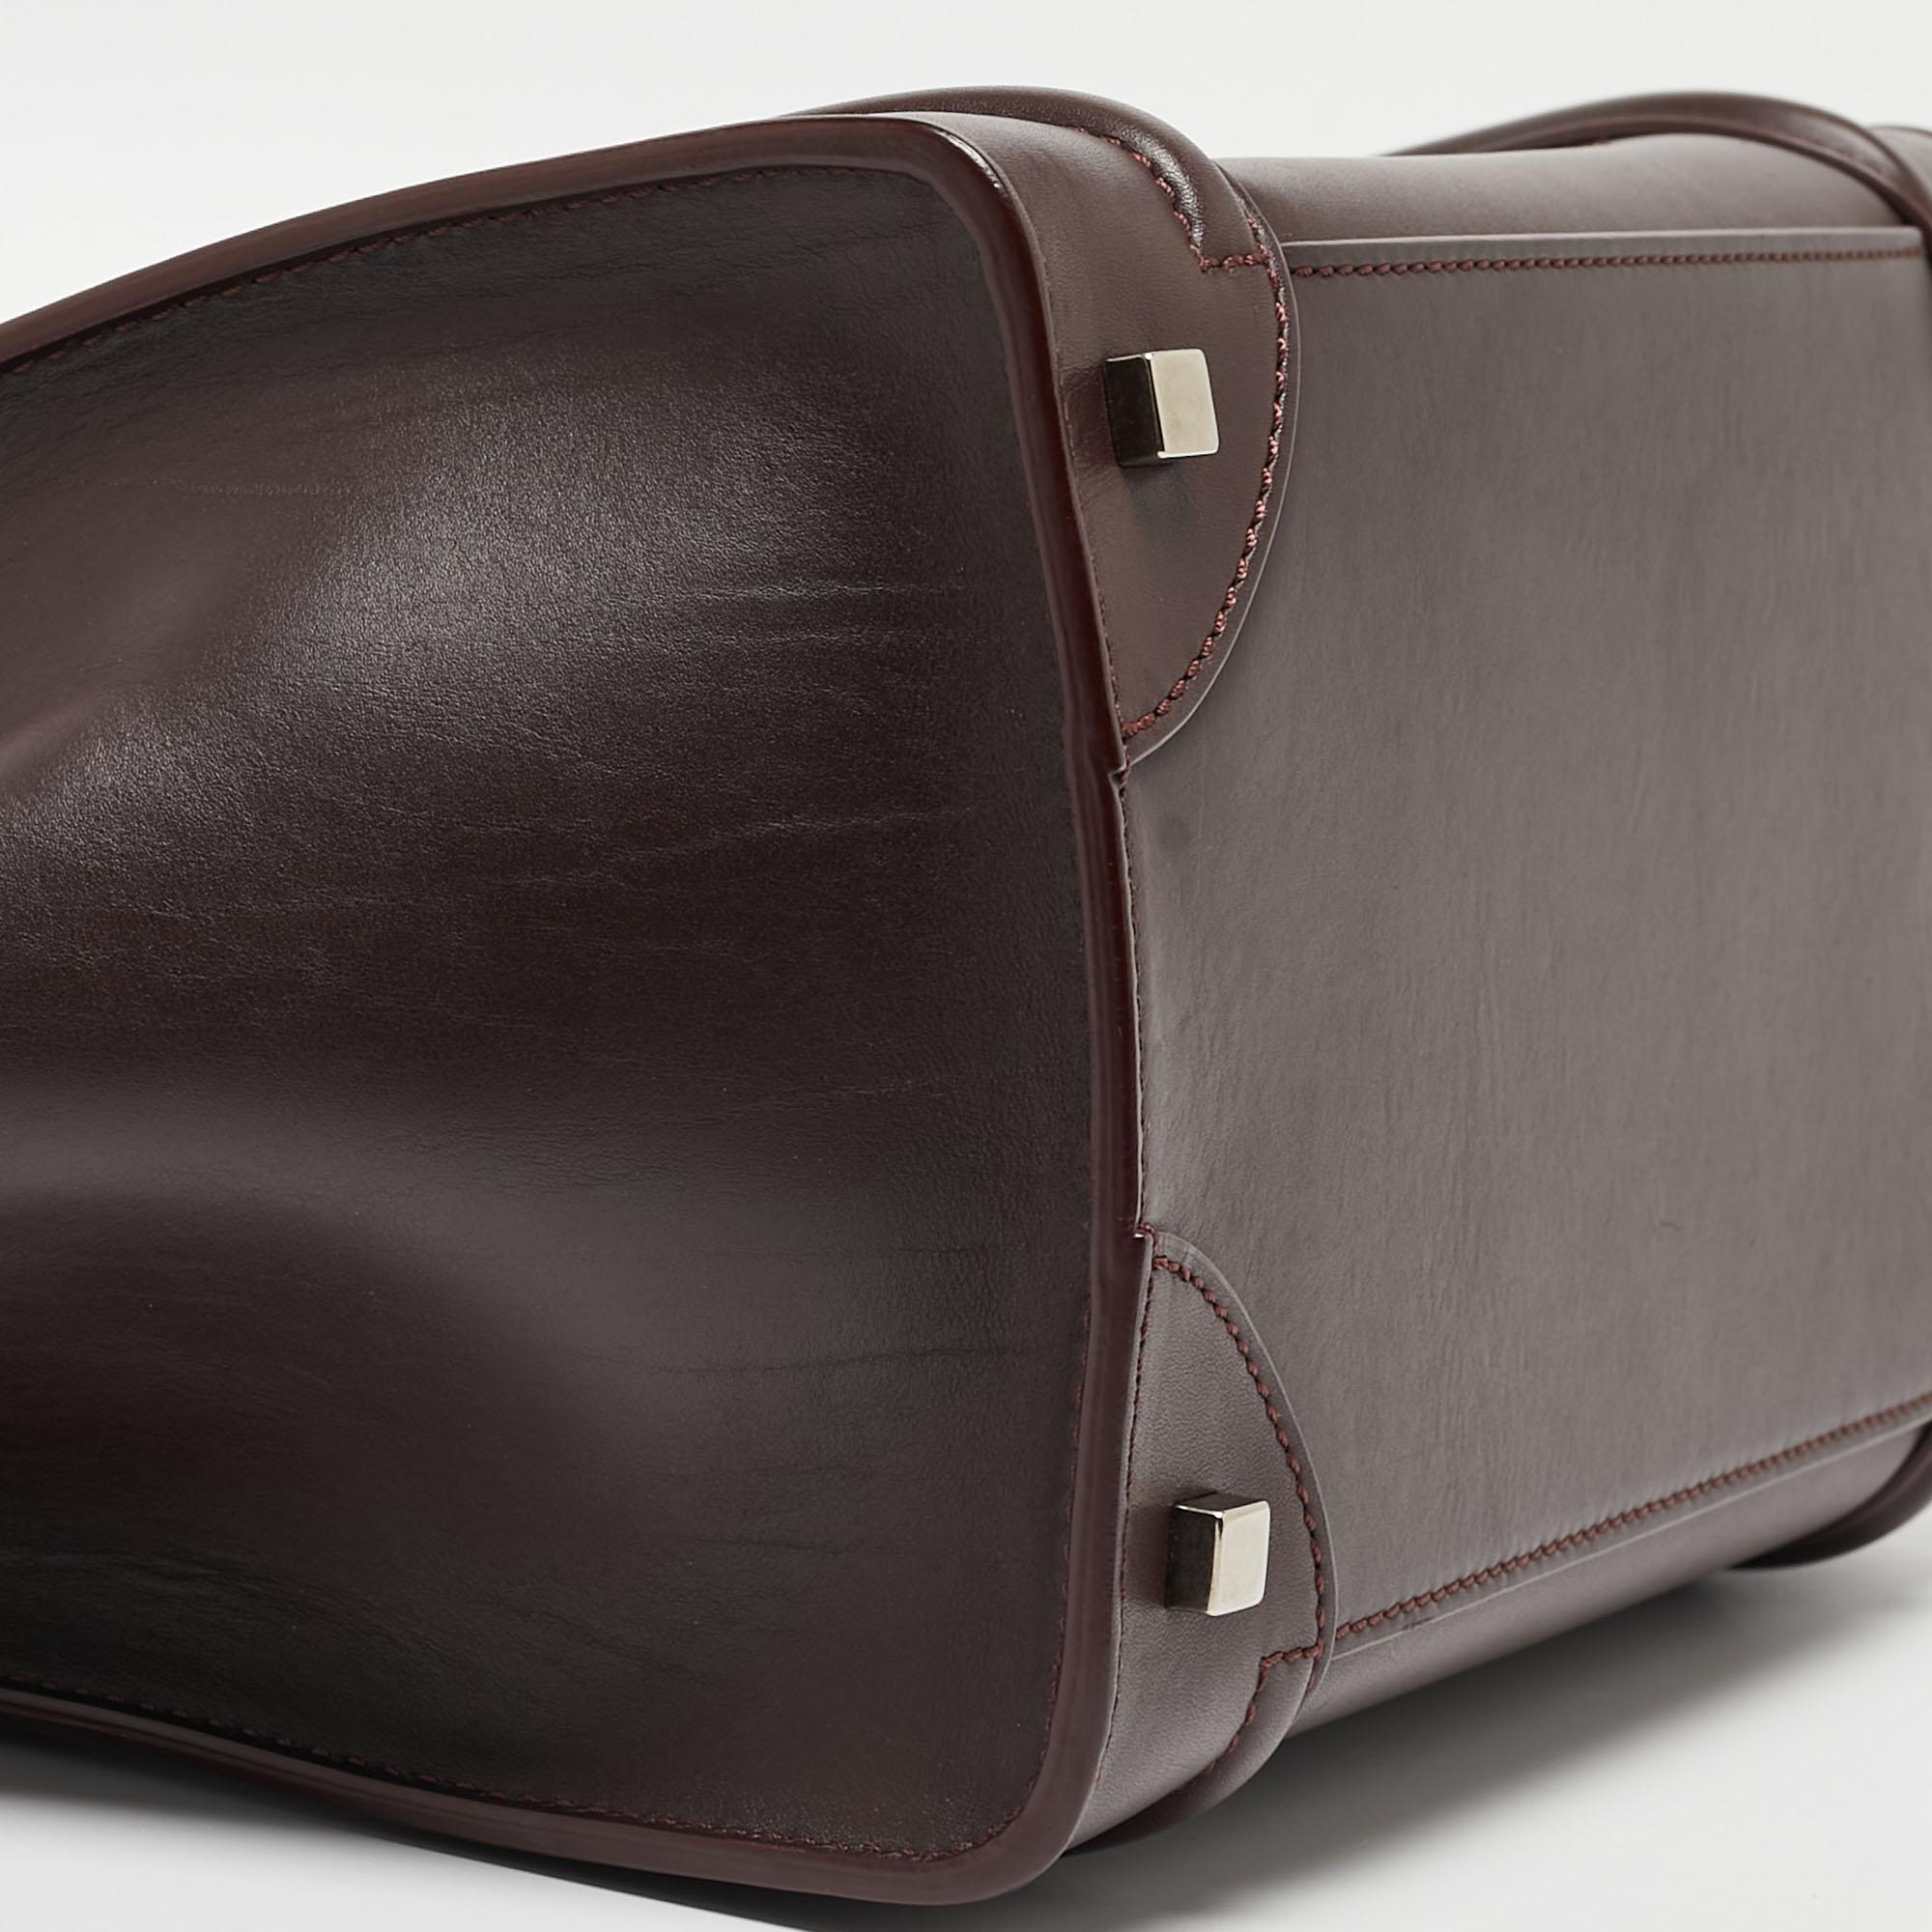 Celine Dark Burgundy Leather Mini Luggage Tote For Sale 2